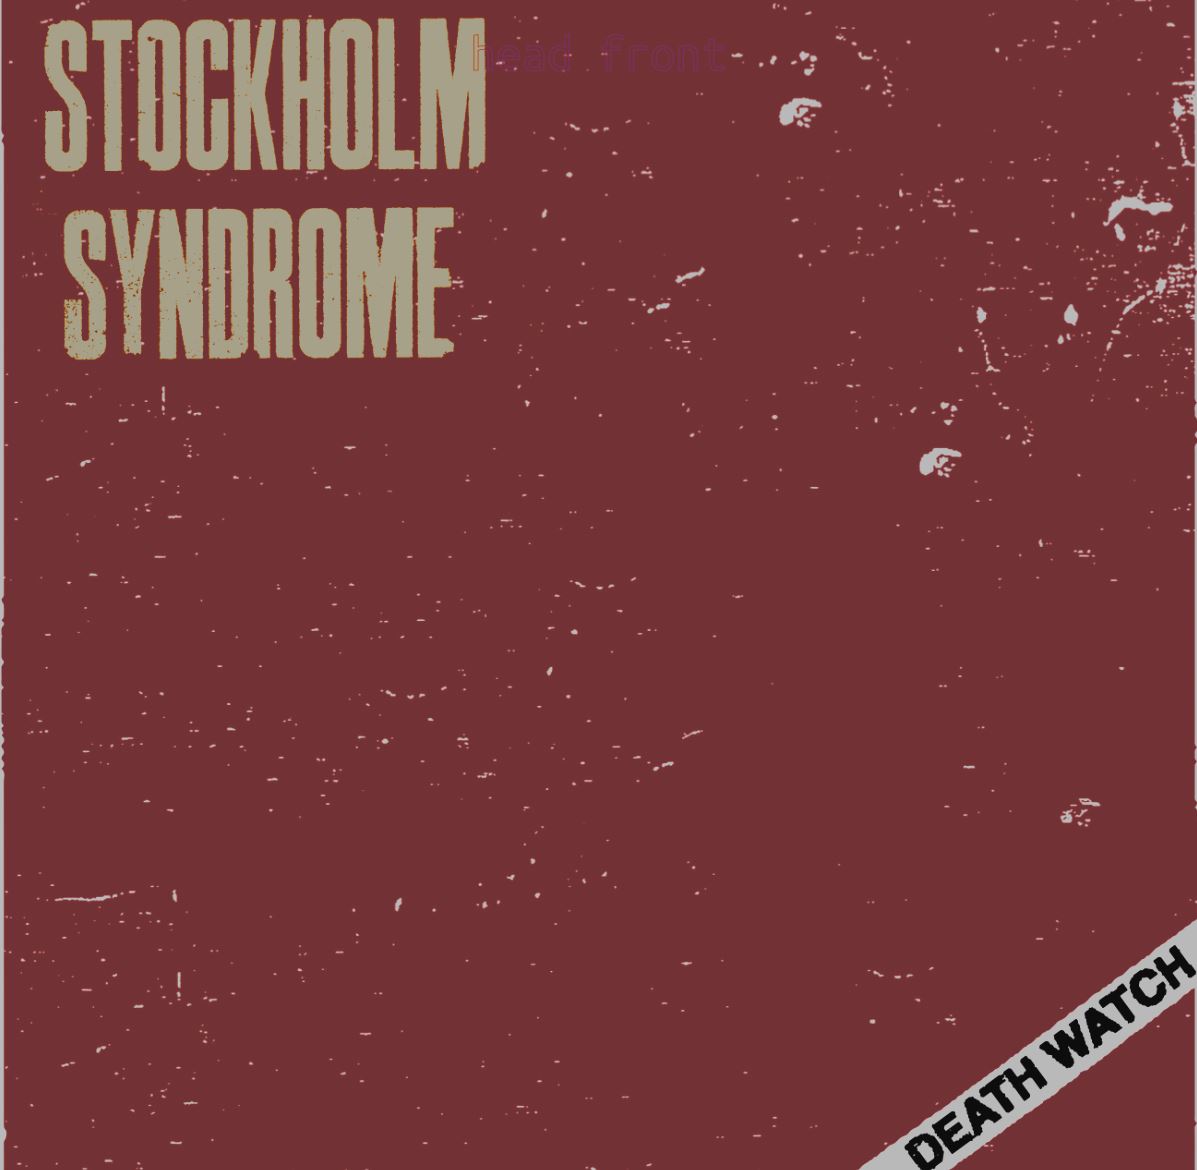 Stockholm Syndrome - Death Watch LP (red vinyl) [PREORDER]